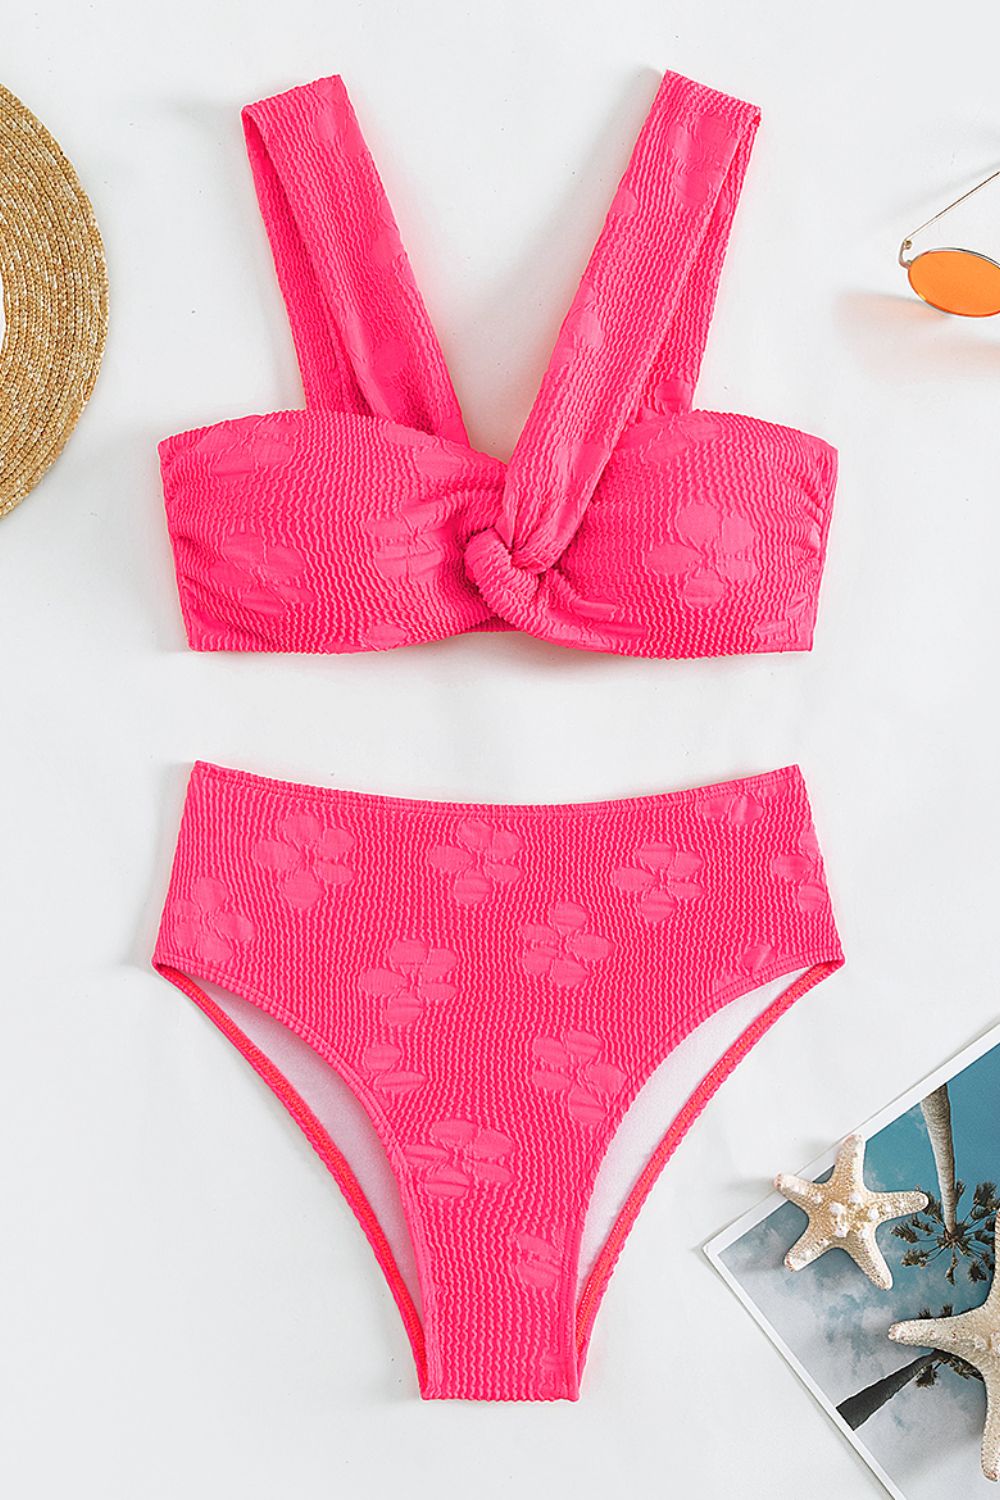 Misty Rose Wanna Play Mermaids Floral Textured Twisted Detail Bikini Set Swimwear